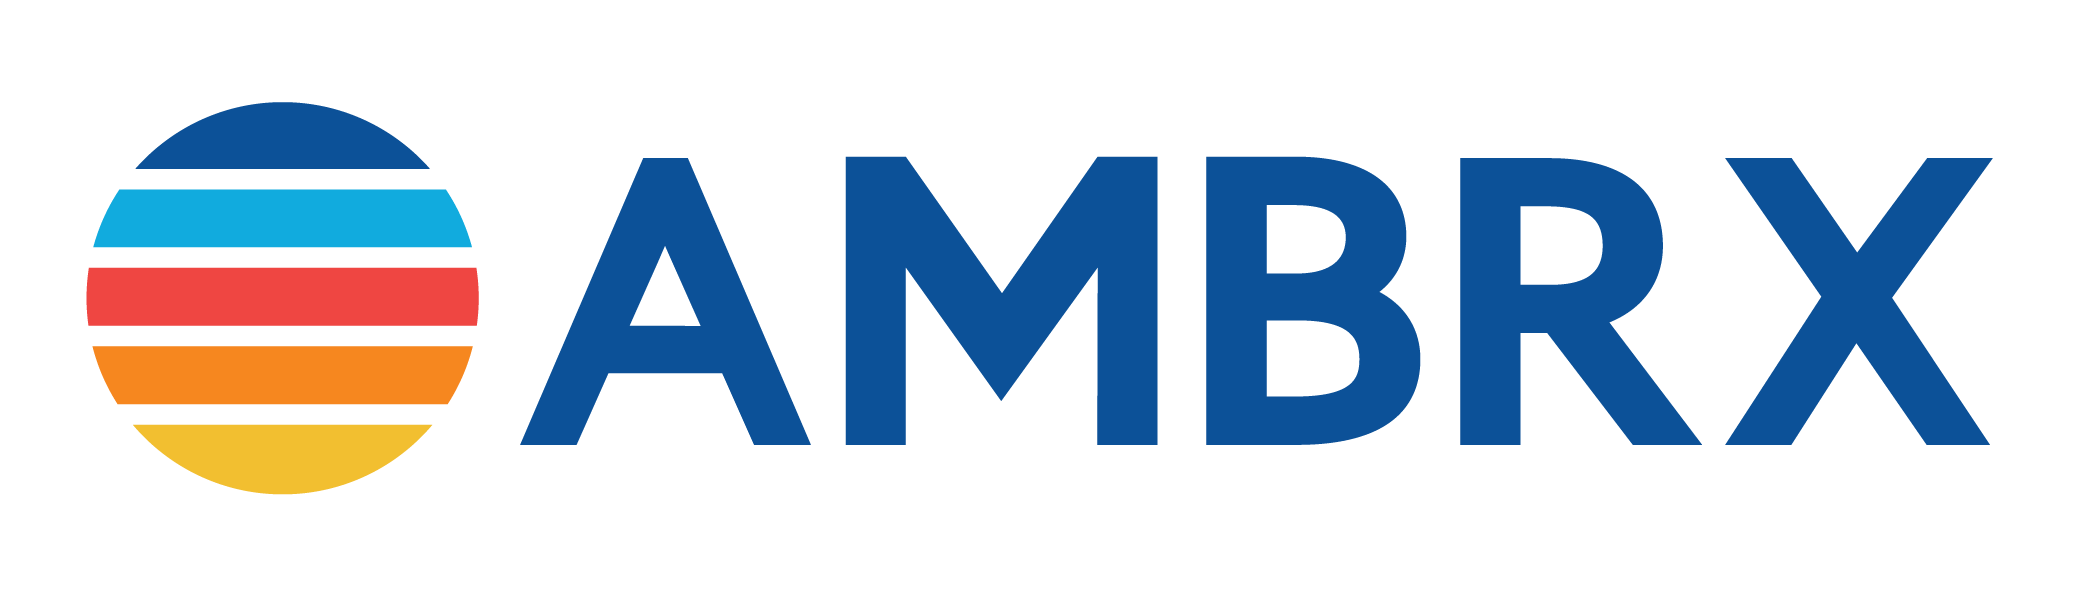 Ambrx_Logo_png-01.png